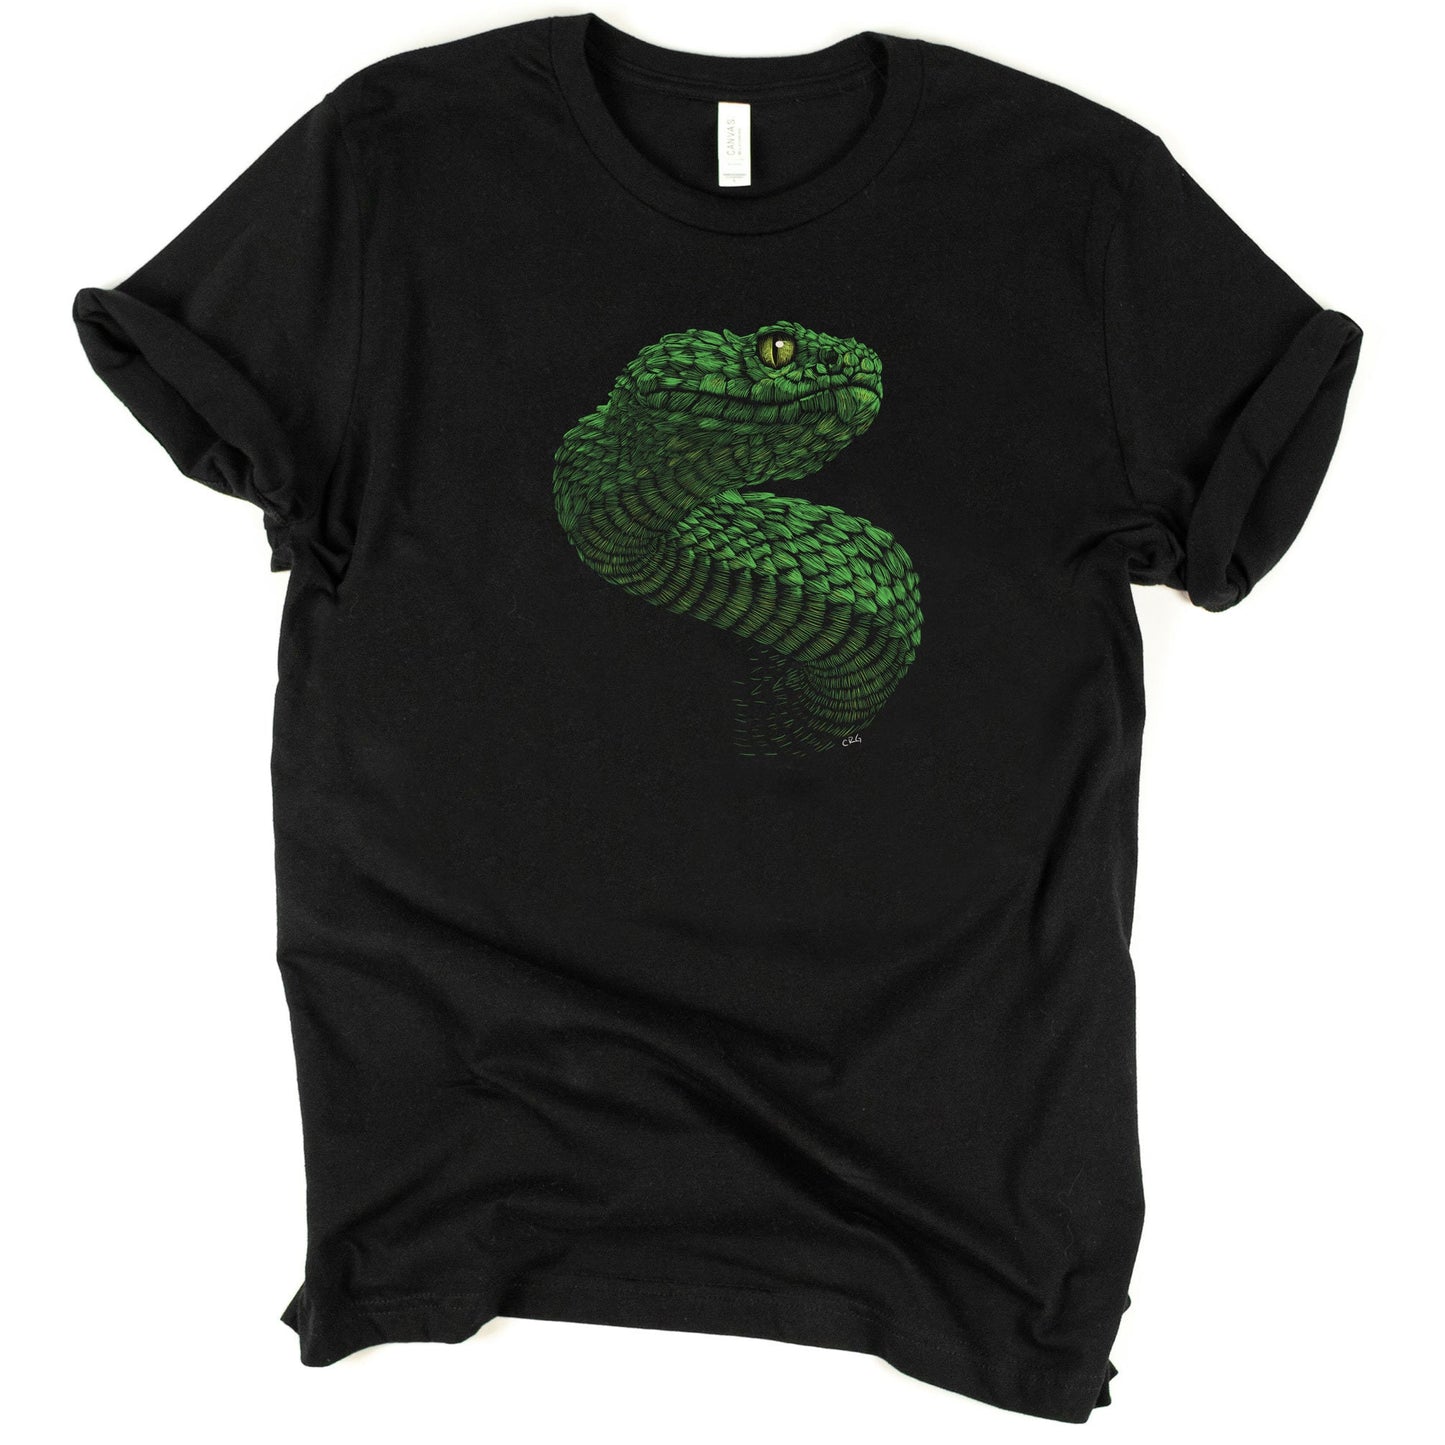 Green Viper Shirt